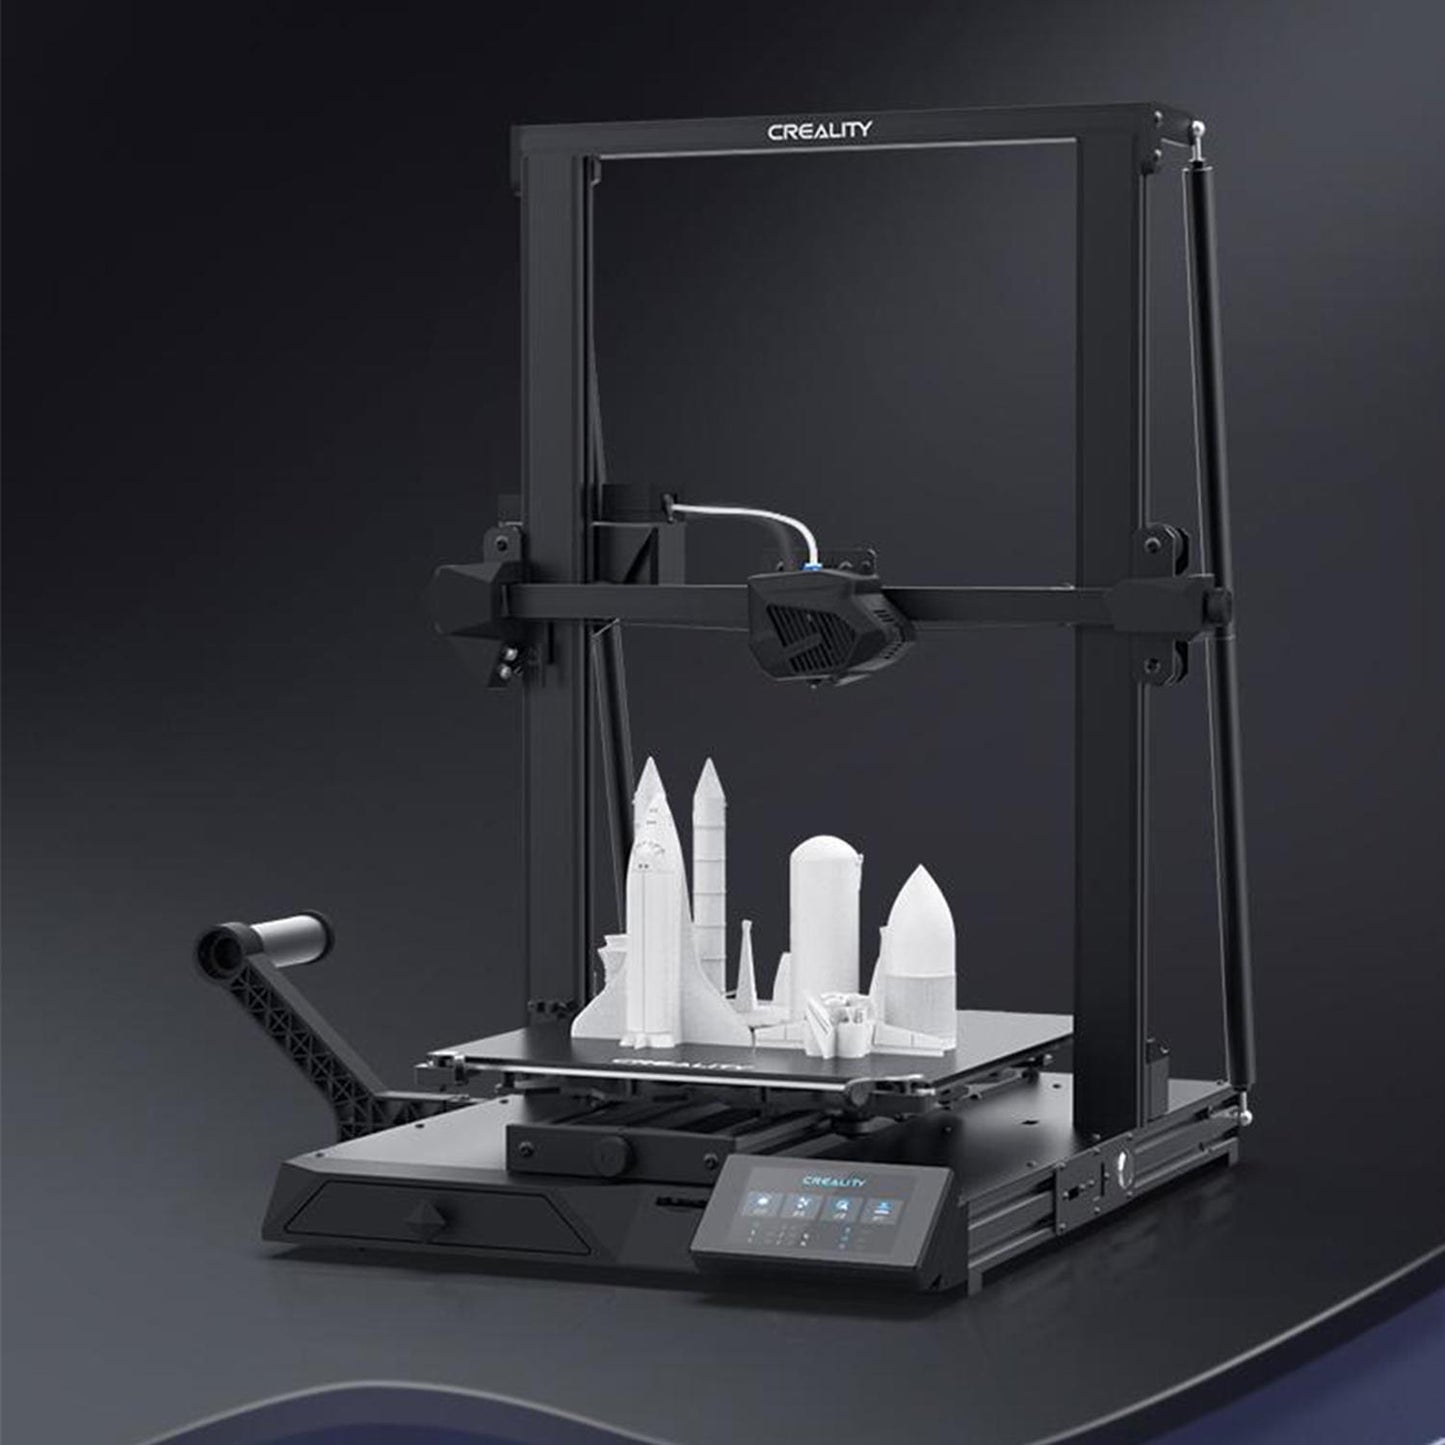 Impresora Creality 3D CR-10 Smart tecnología FDM, WiFi